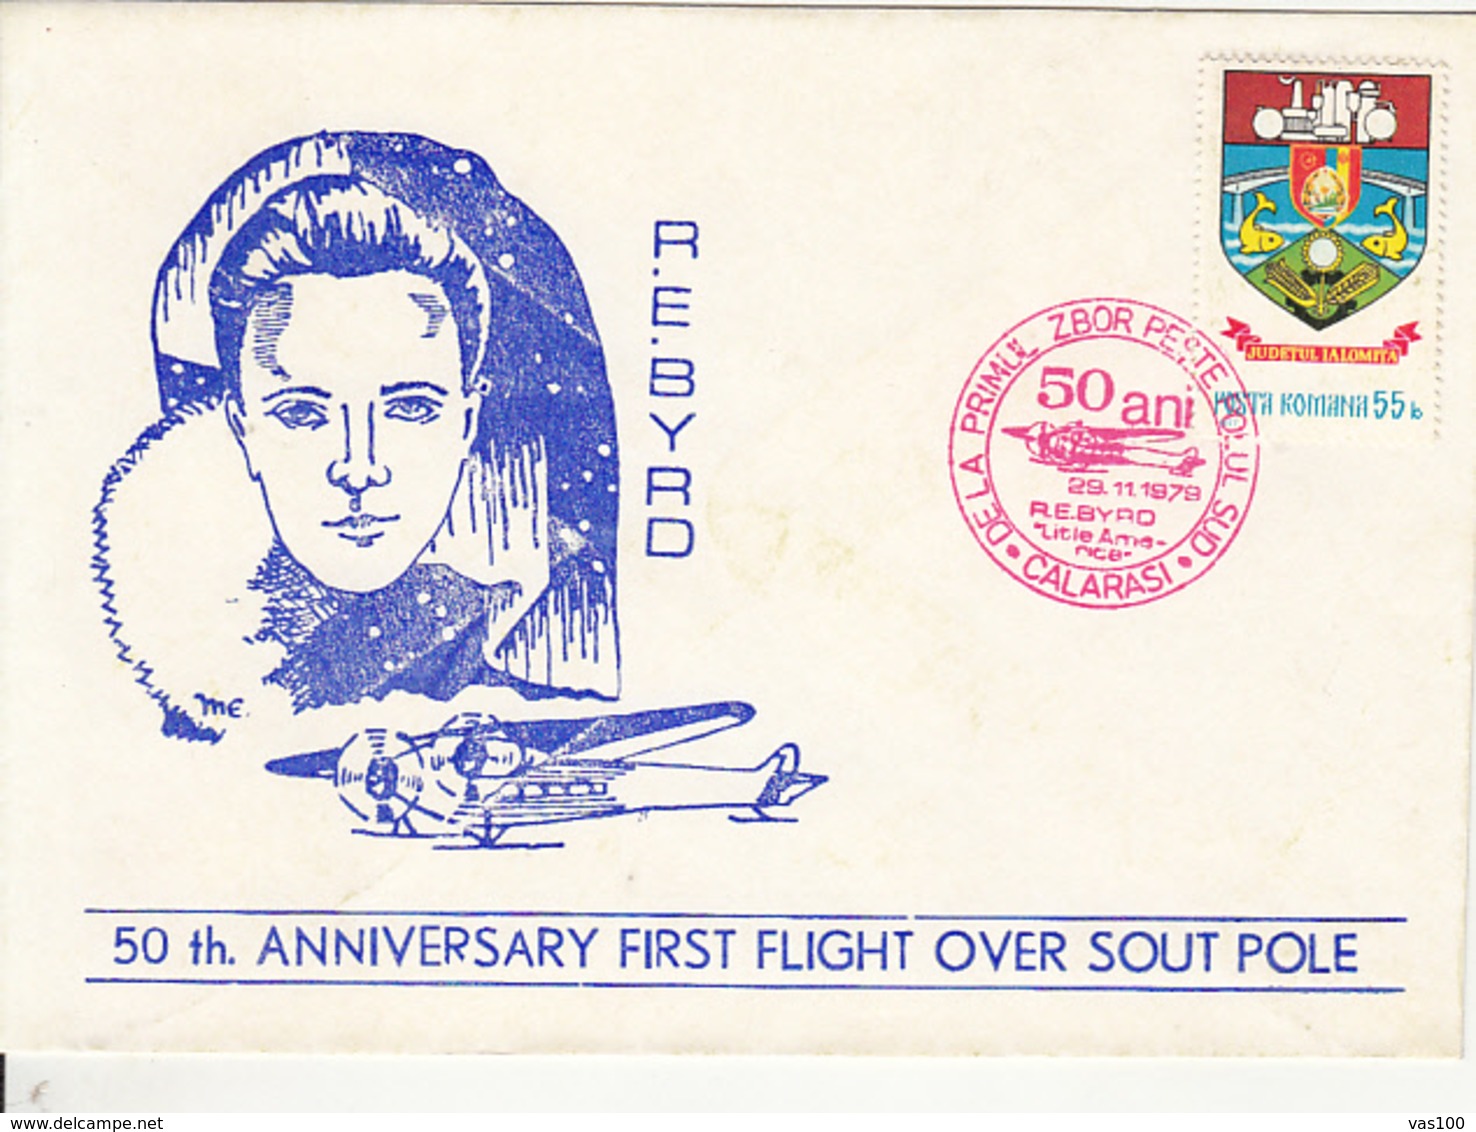 POLAR FLIGHTS, RICHARD E. BYRD FIRST FLIGHT OVER SOUTH POLE, PLANE, SPECIAL COVER, 1979, ROMANIA - Vuelos Polares